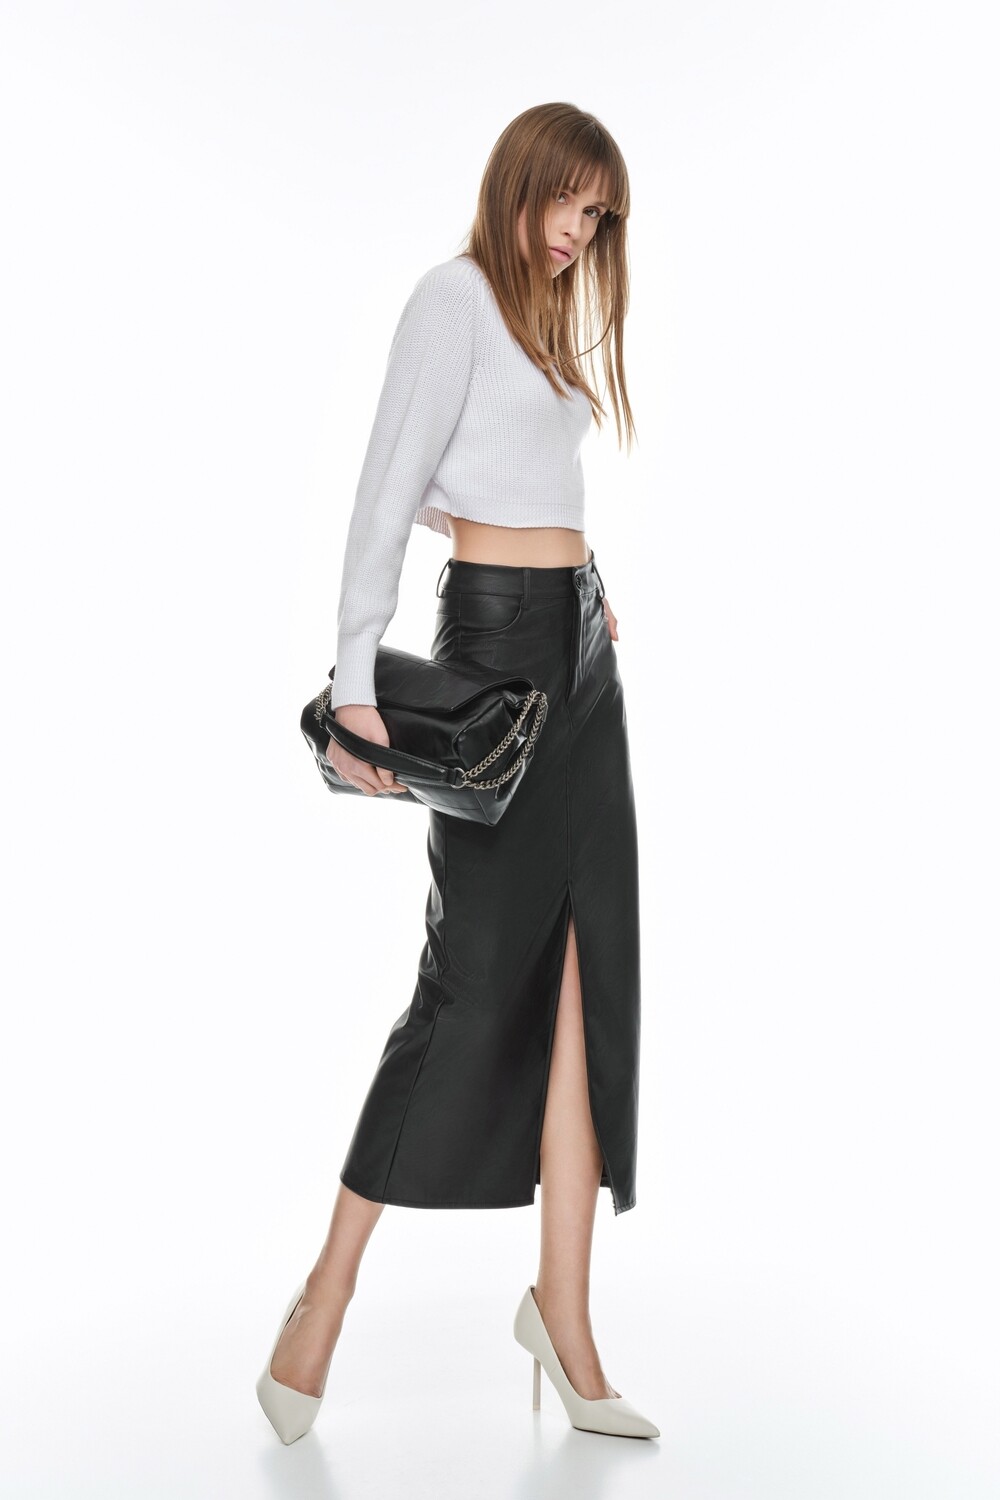 "City Slicker" Vegan leather Maxi Skirt